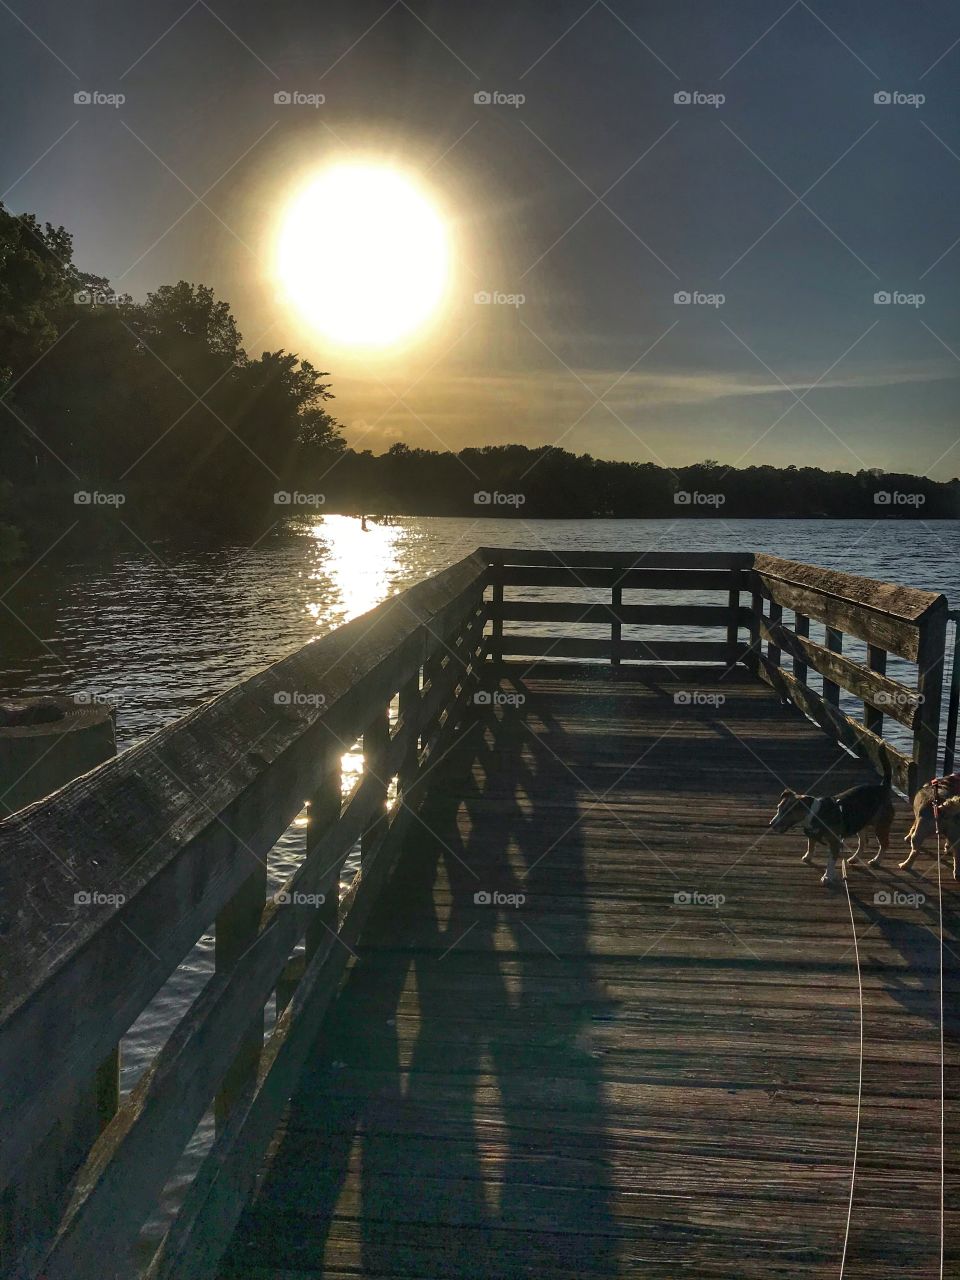 The setting sun, fishing pier, lake and 2 pups. So peaceful. 